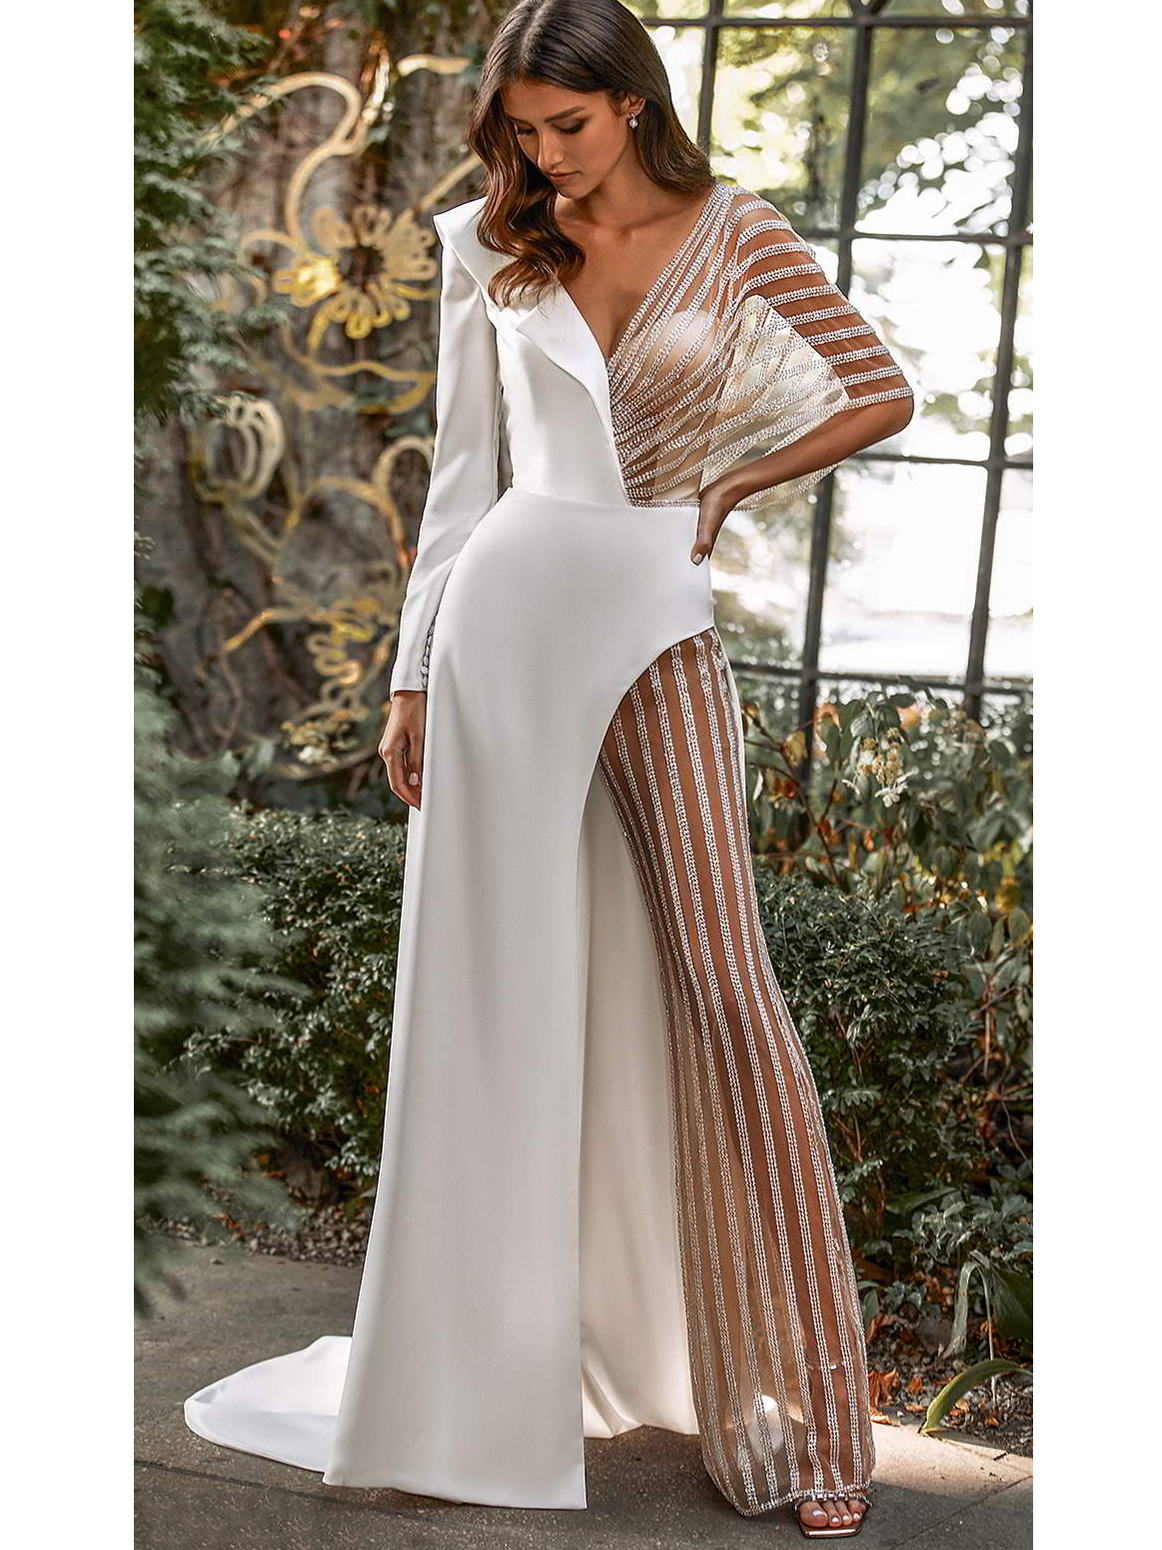 katy-corso-2021-bridal-long-sleeve-collar-v-neckline-clean-minimalist-pant-a-line-wedding-dress-3 (1).jpg